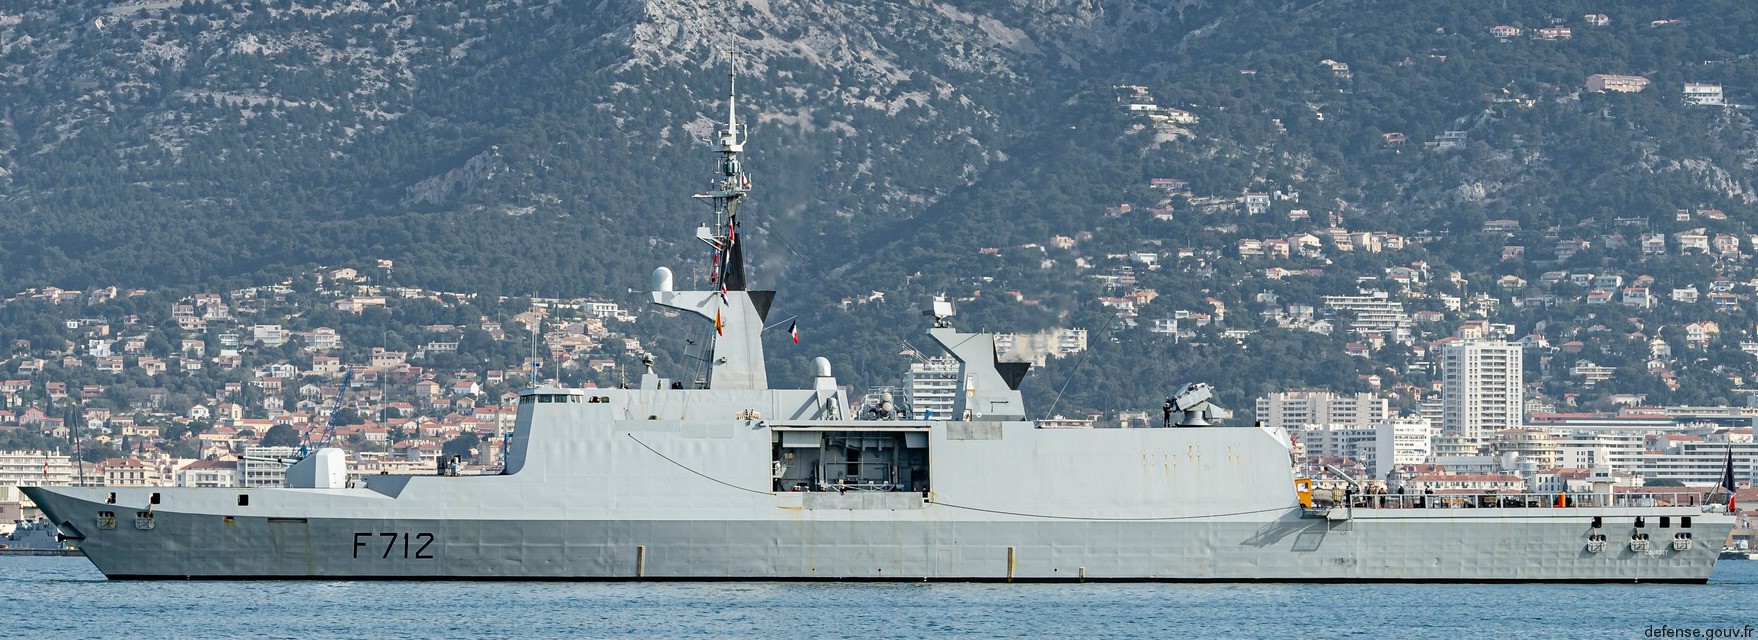 f-712 fs courbet la fayette class frigate french navy marine nationale 36 toulon